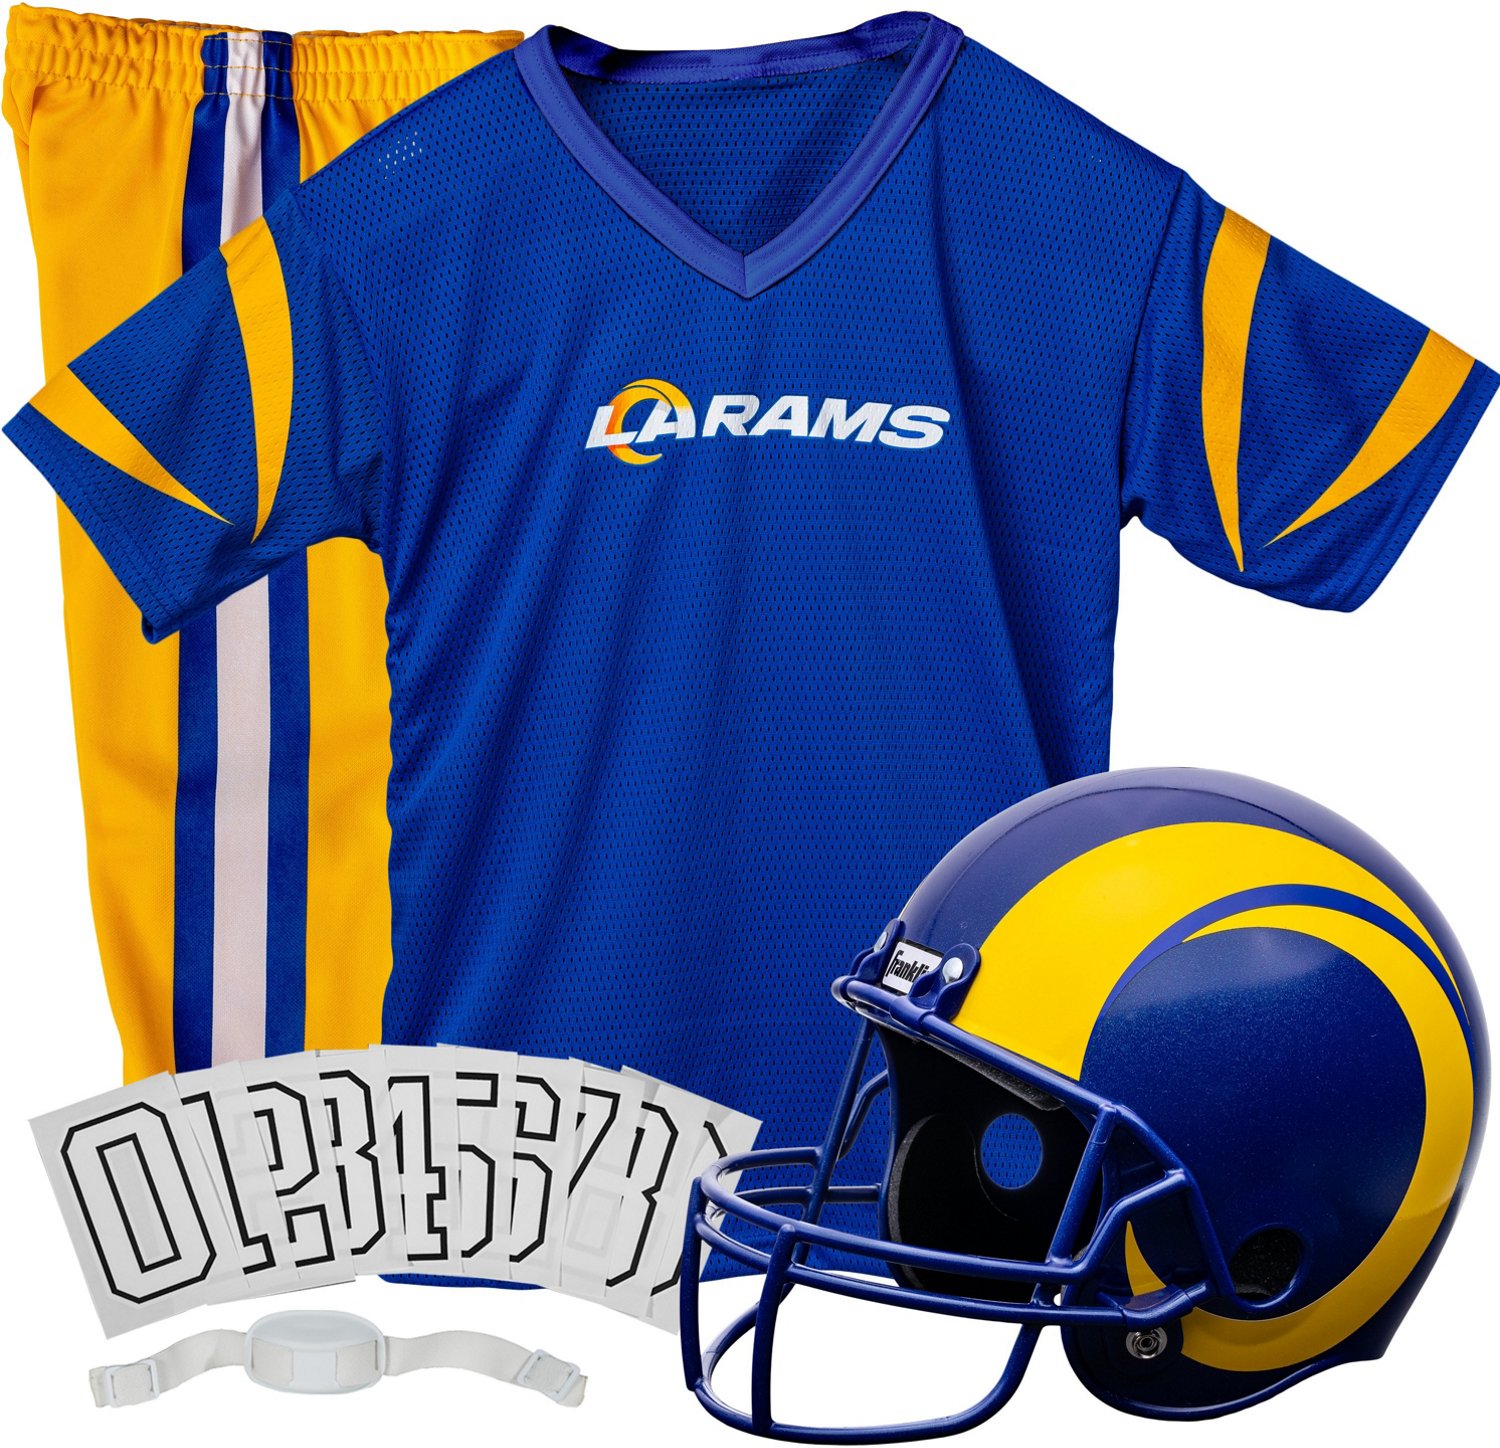 Los Angeles Rams Jerseys For Women, Youth, or Men